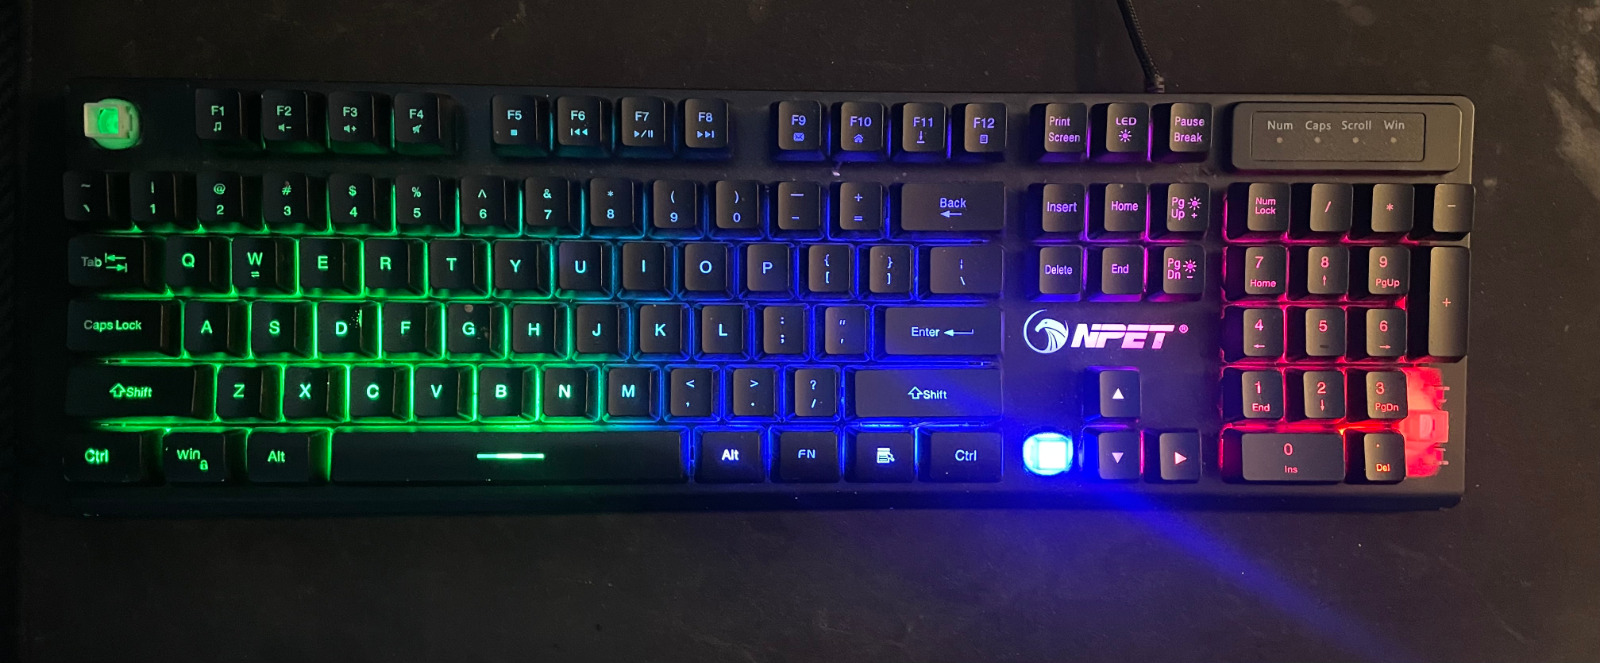 NPET K10 gaming keyboard used with missing replaceable keys